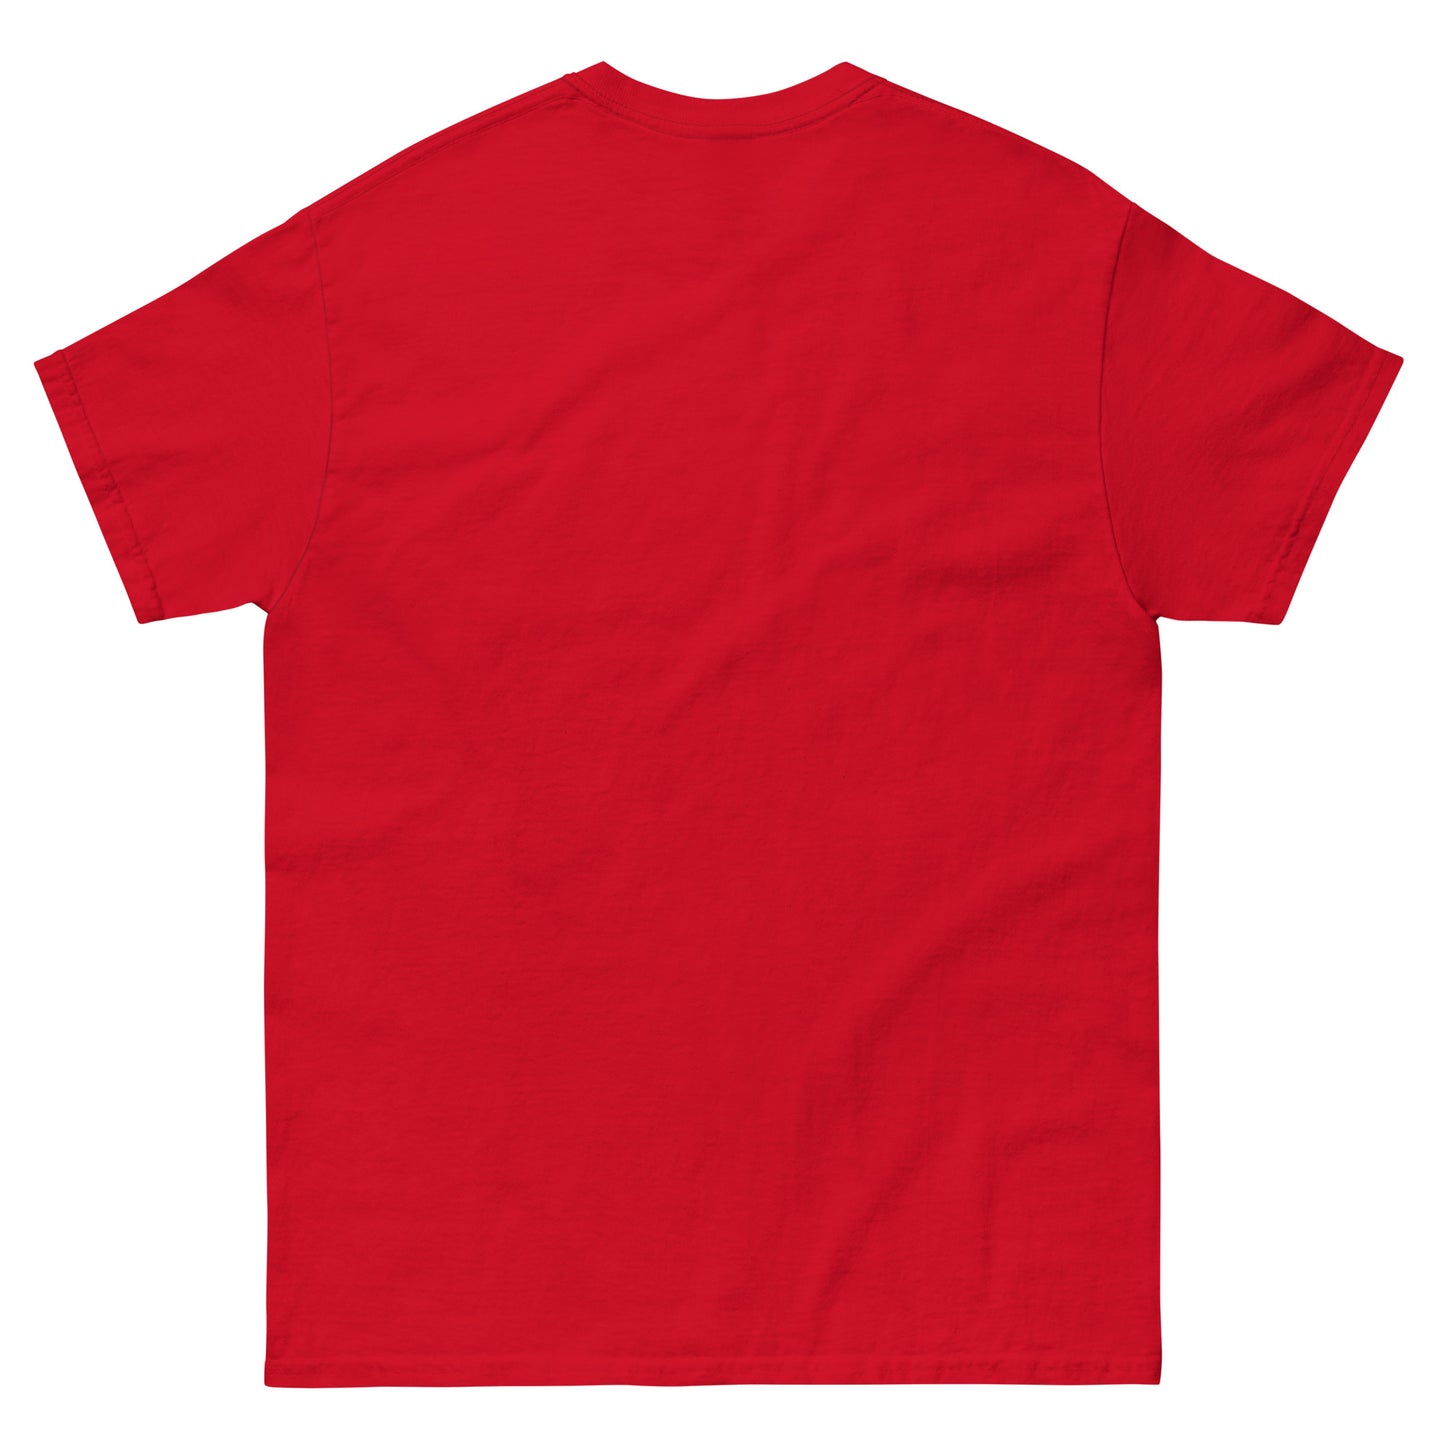 Pikahomer T-Shirt